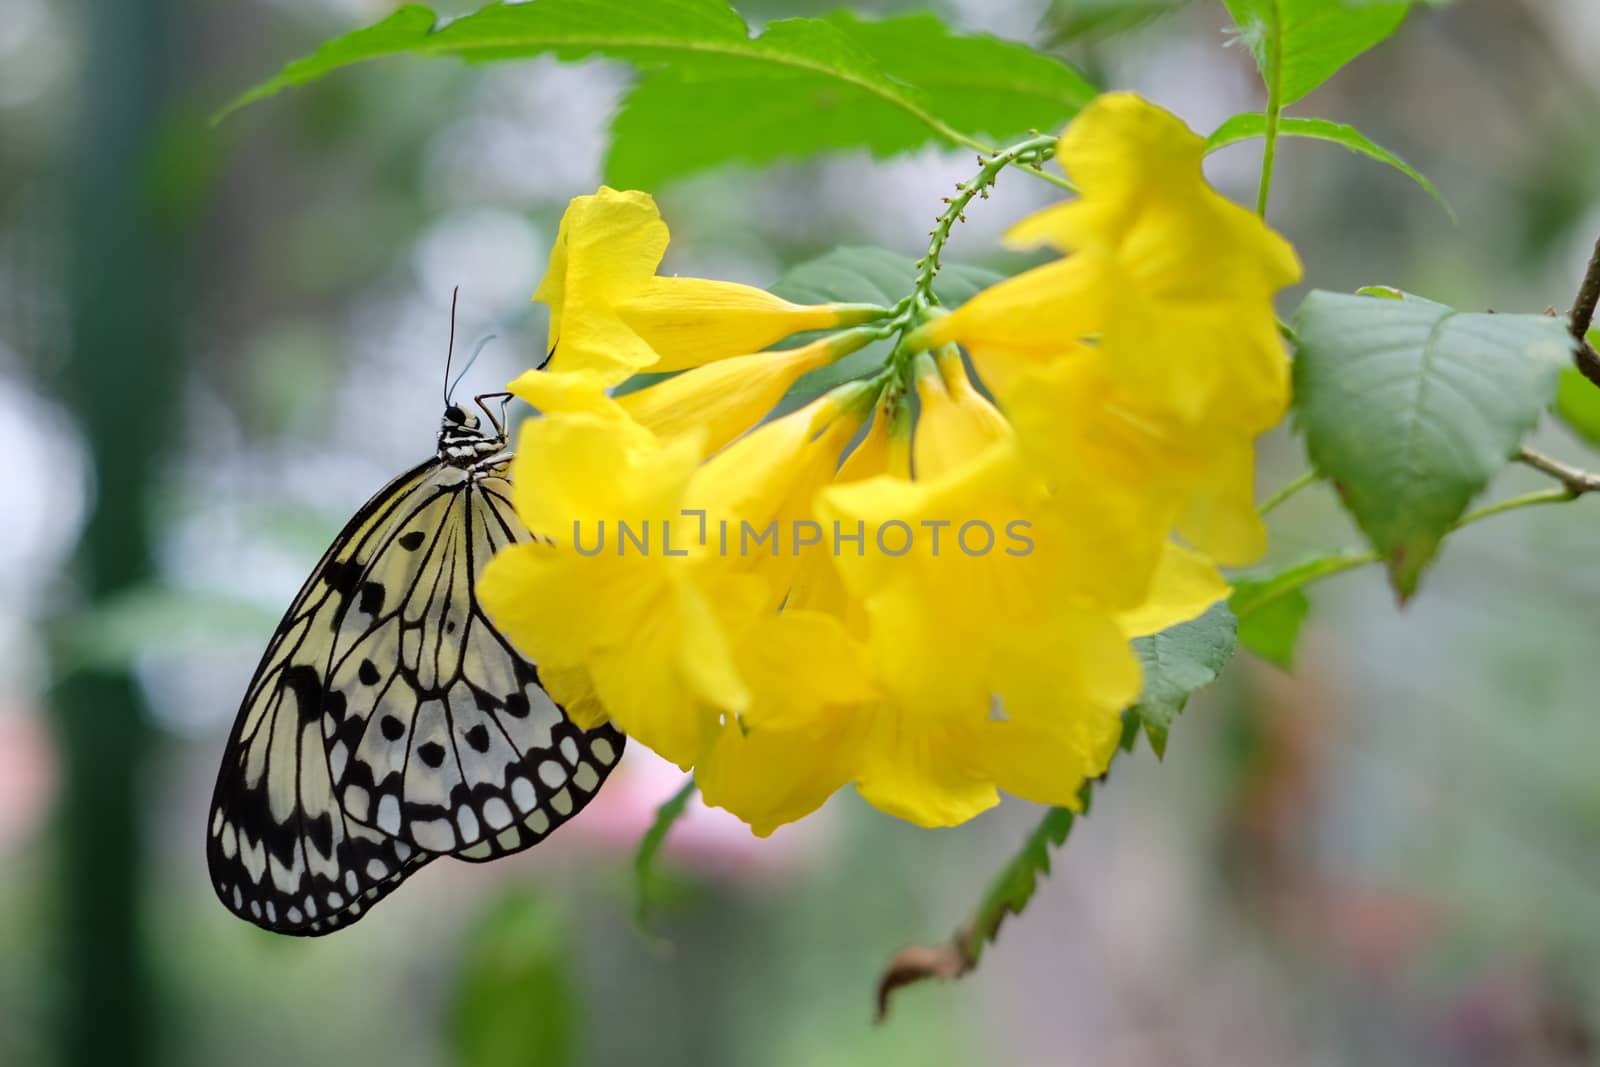 Idea stolli logani . Black and white butterly on yellow flower by rainfallsup